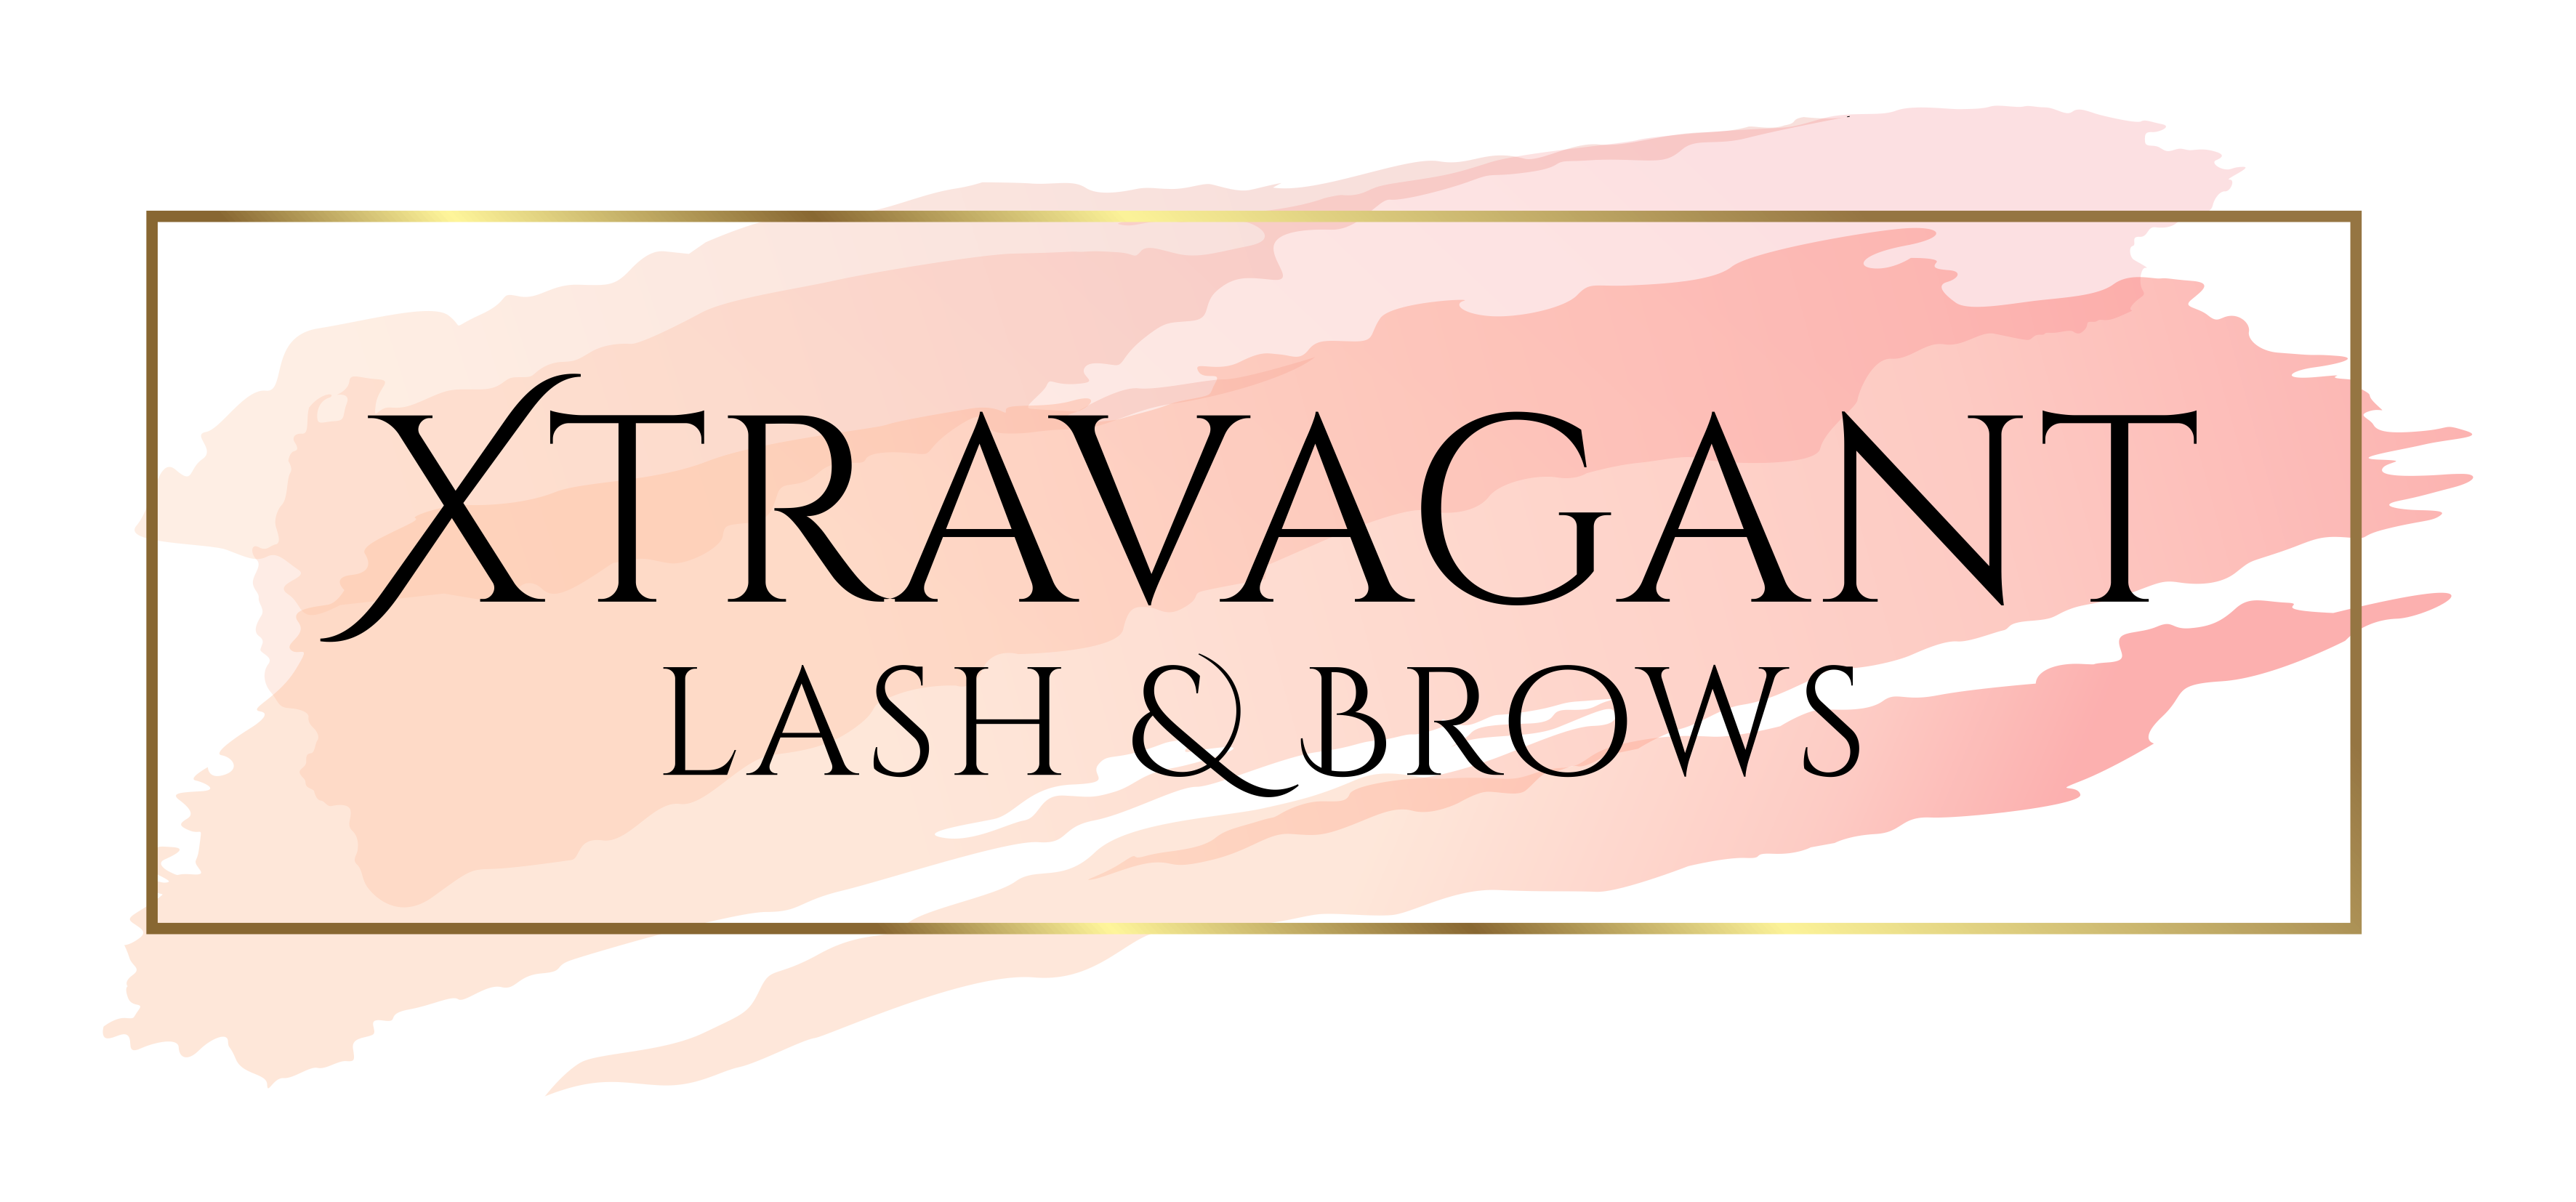 Xtravagant Lash & Brow